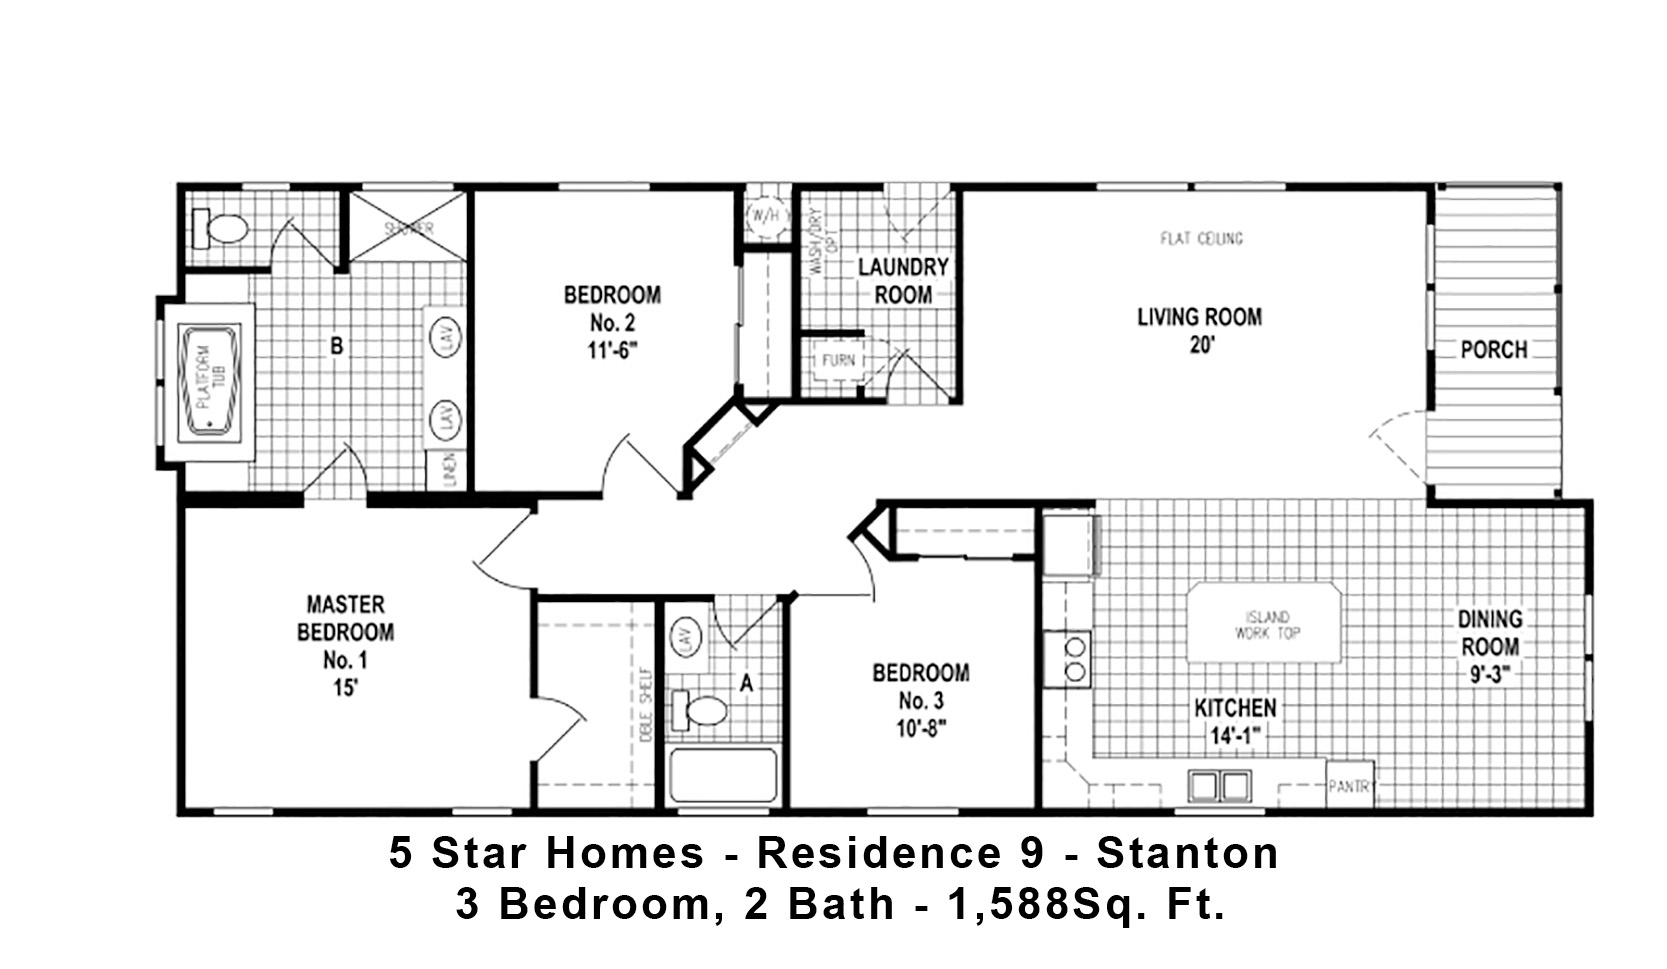 5 Star Homes - Residence 9 - Stanton Floorplan